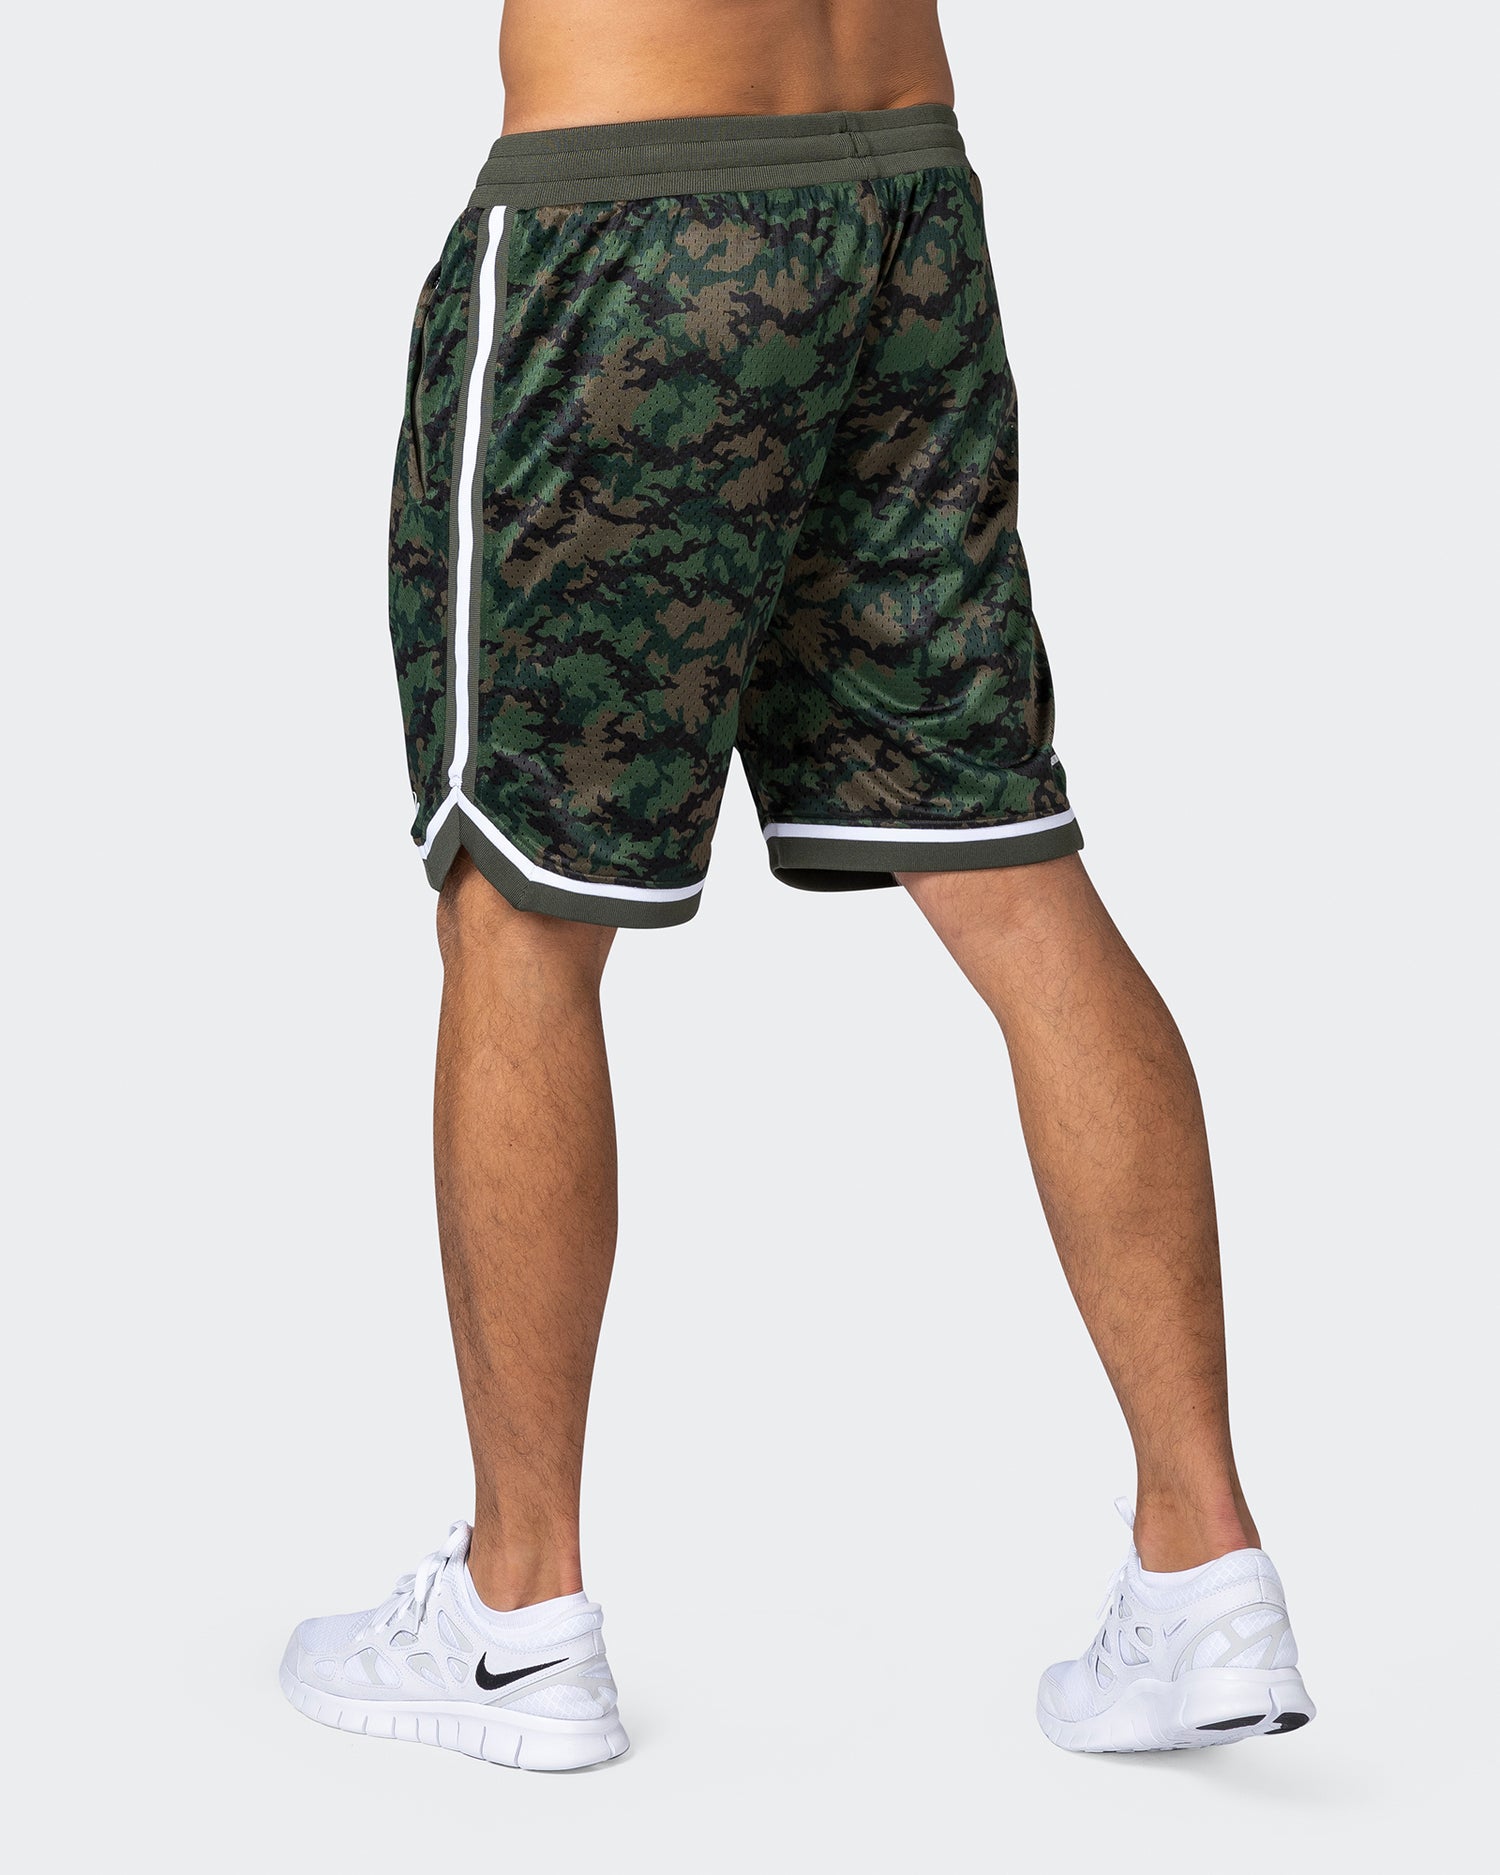 8" Basketball Shorts - Dark Khaki Camo Print